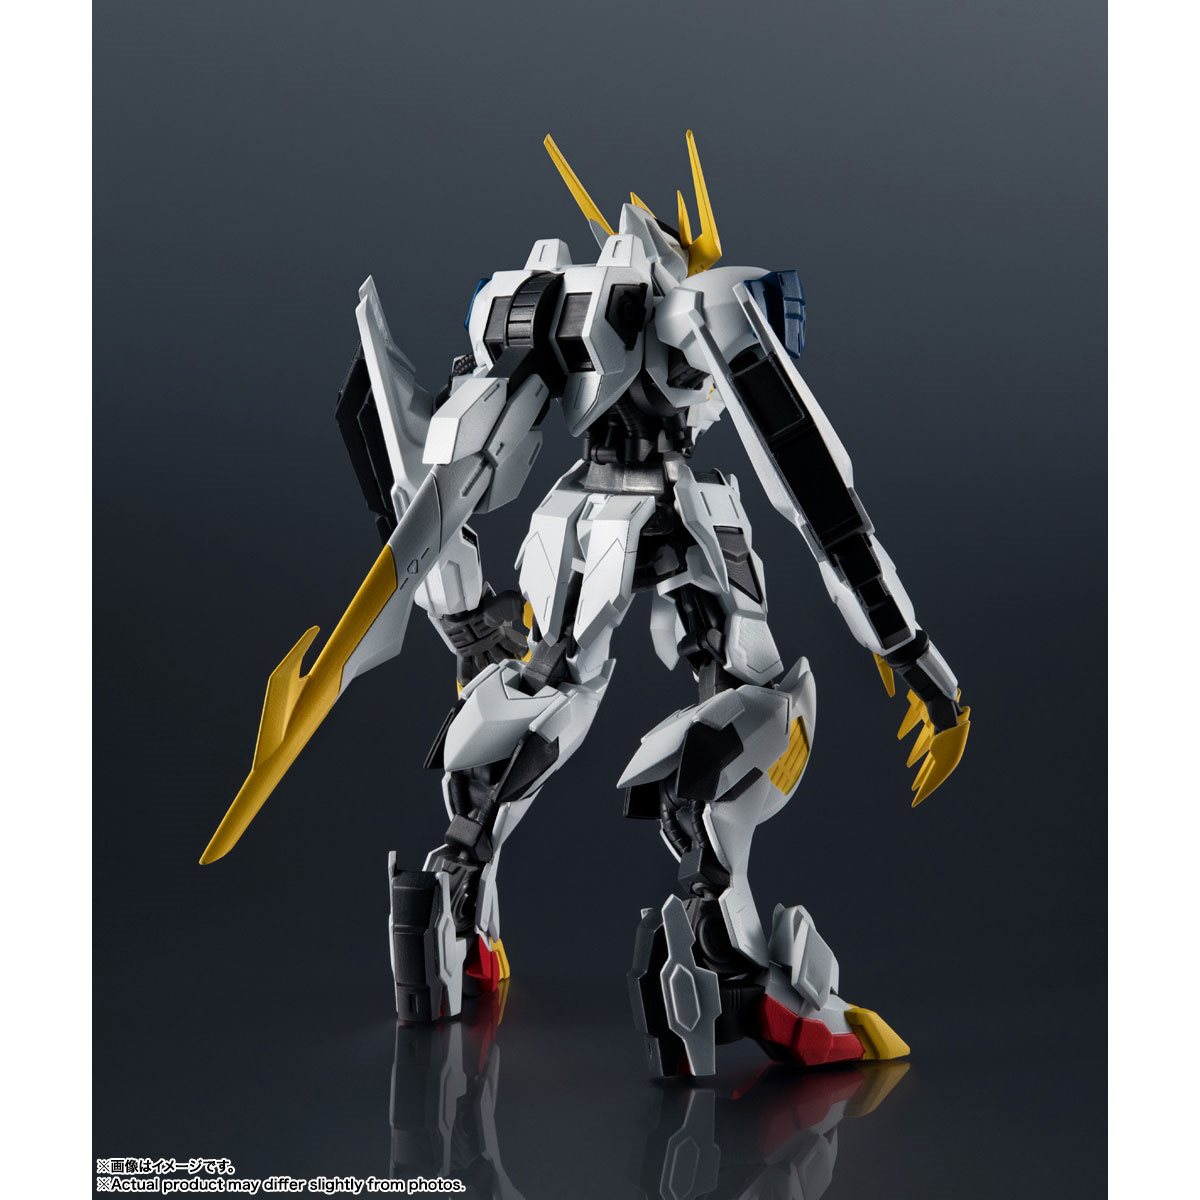 Bandai Tamashii Nations The Robot Spirits: Mobile Suit Gundam Iron Blooded Orphans Gundam - Lupus Rex Figura de Accion